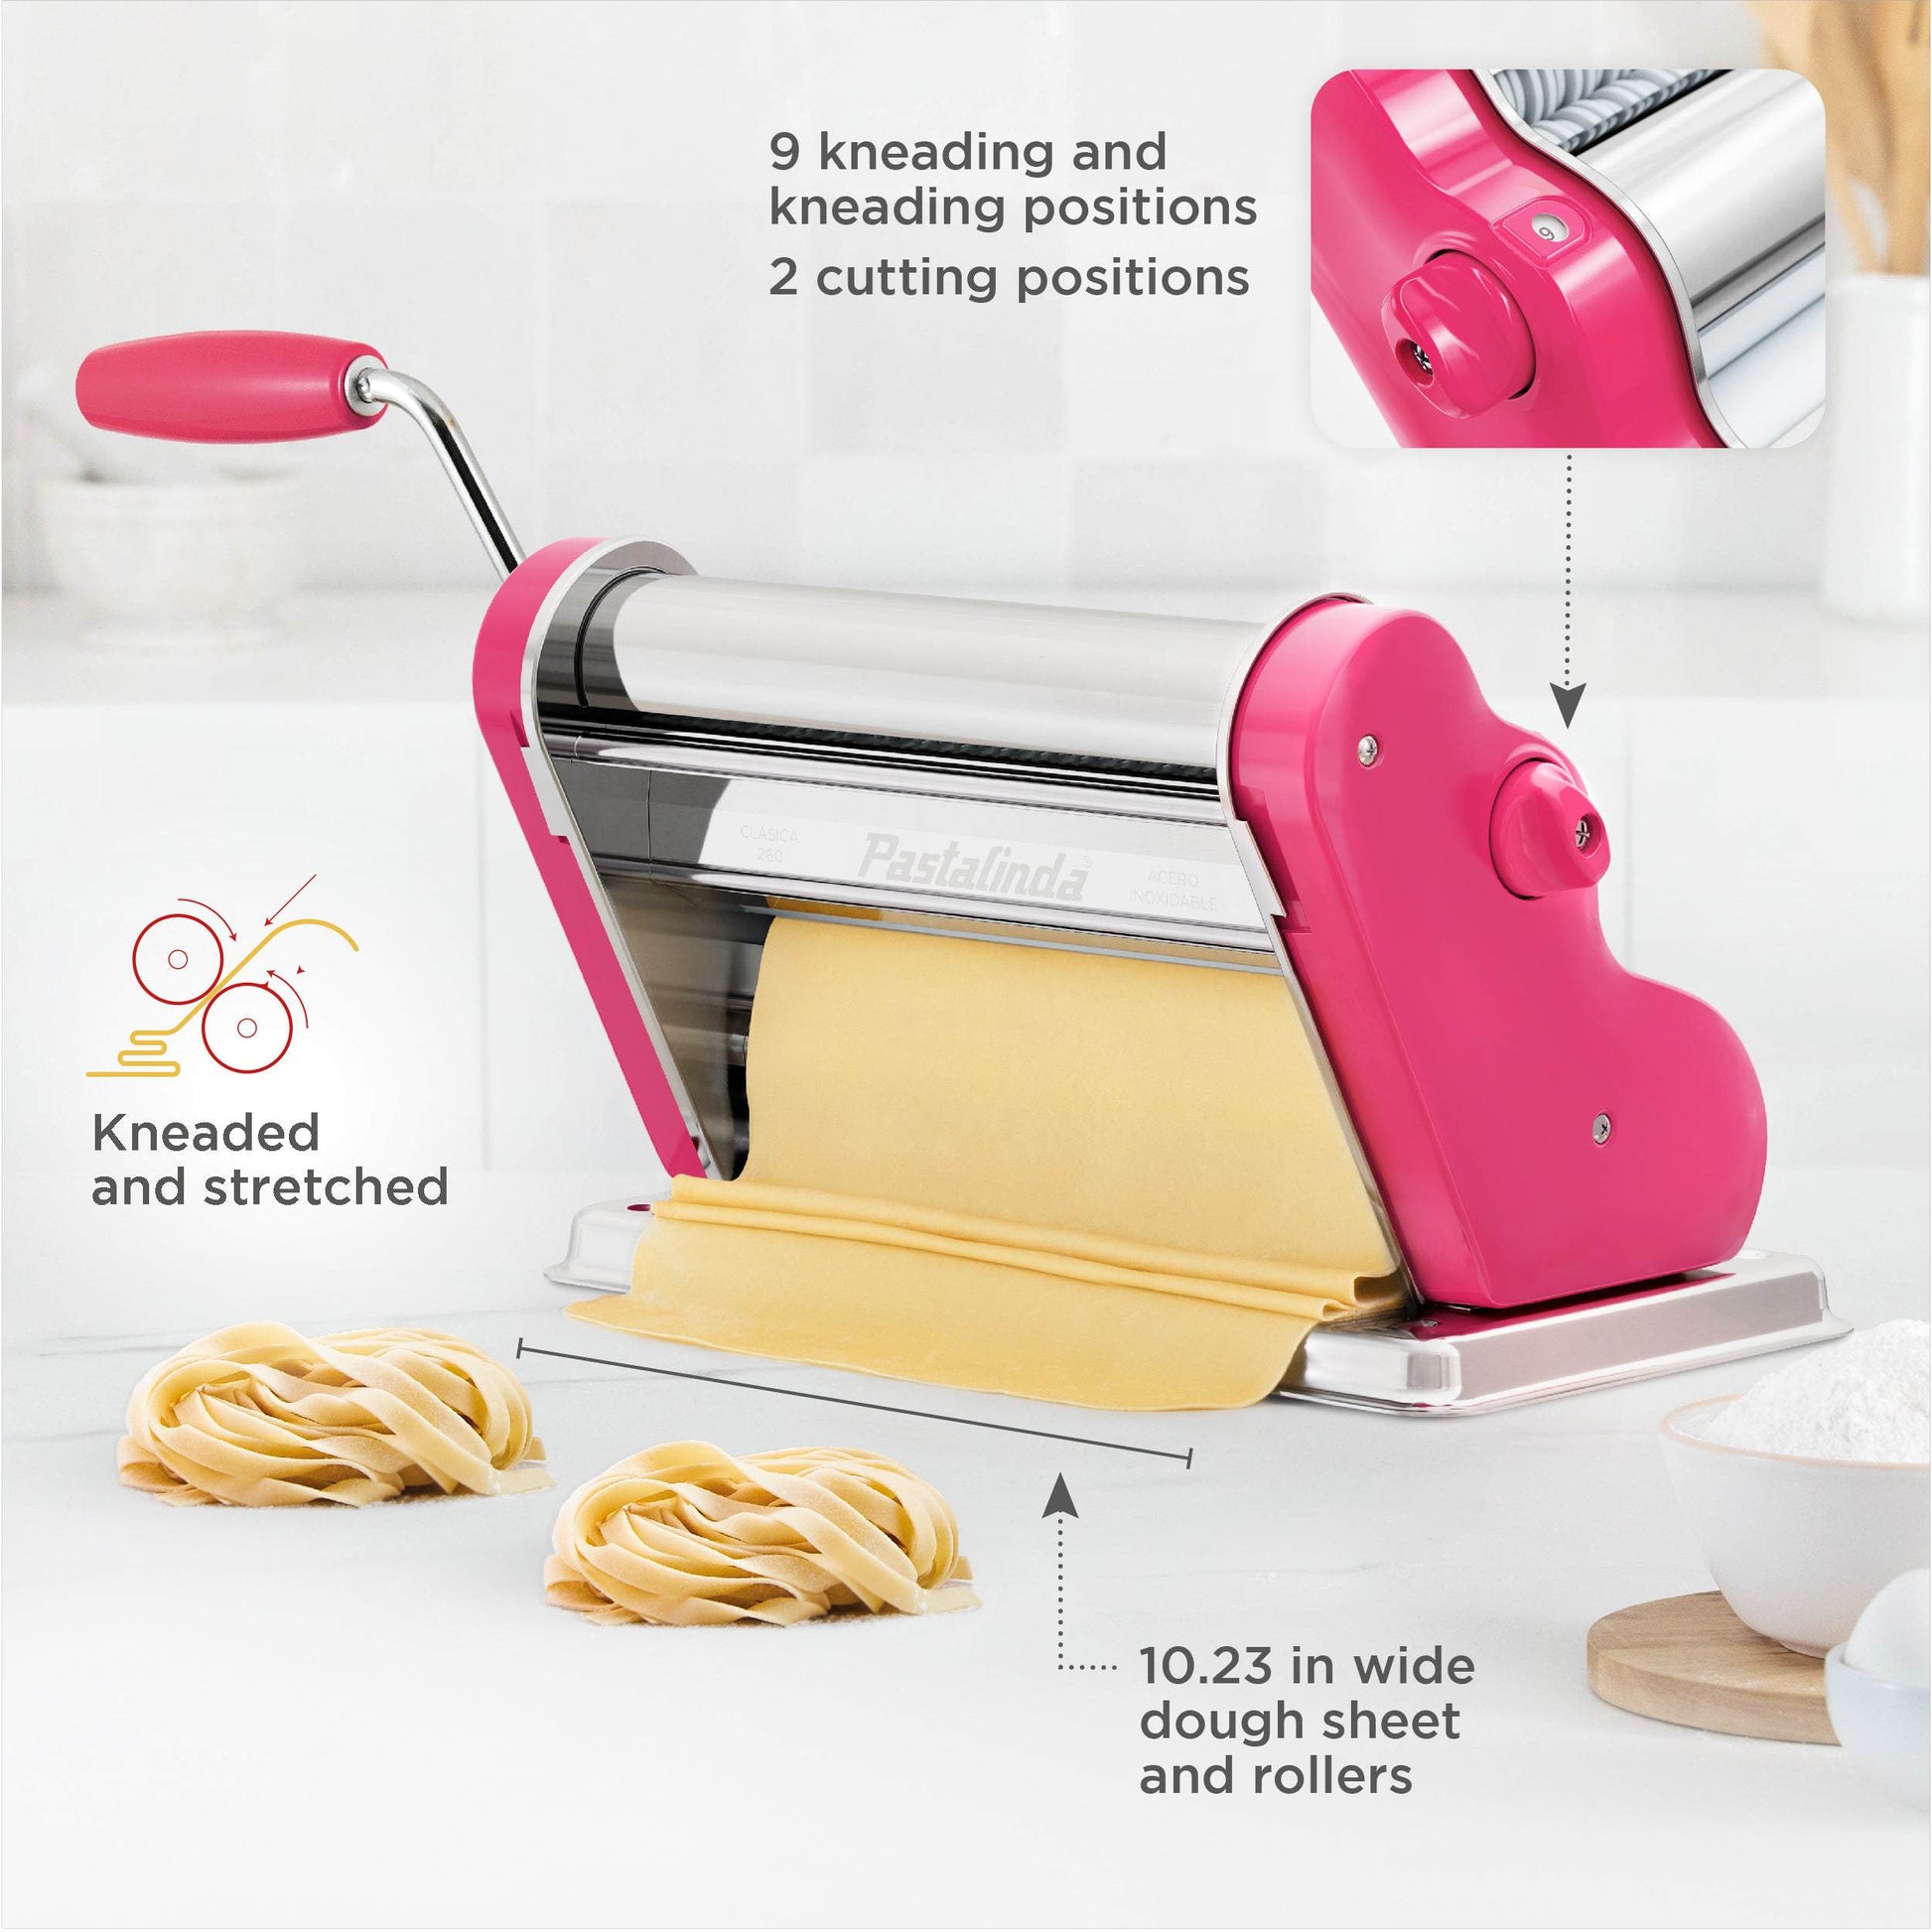 Pastalinda Classic 260 Fuchsia Pasta Maker Machine With Hand Crank And Two Clamps - Pastalinda